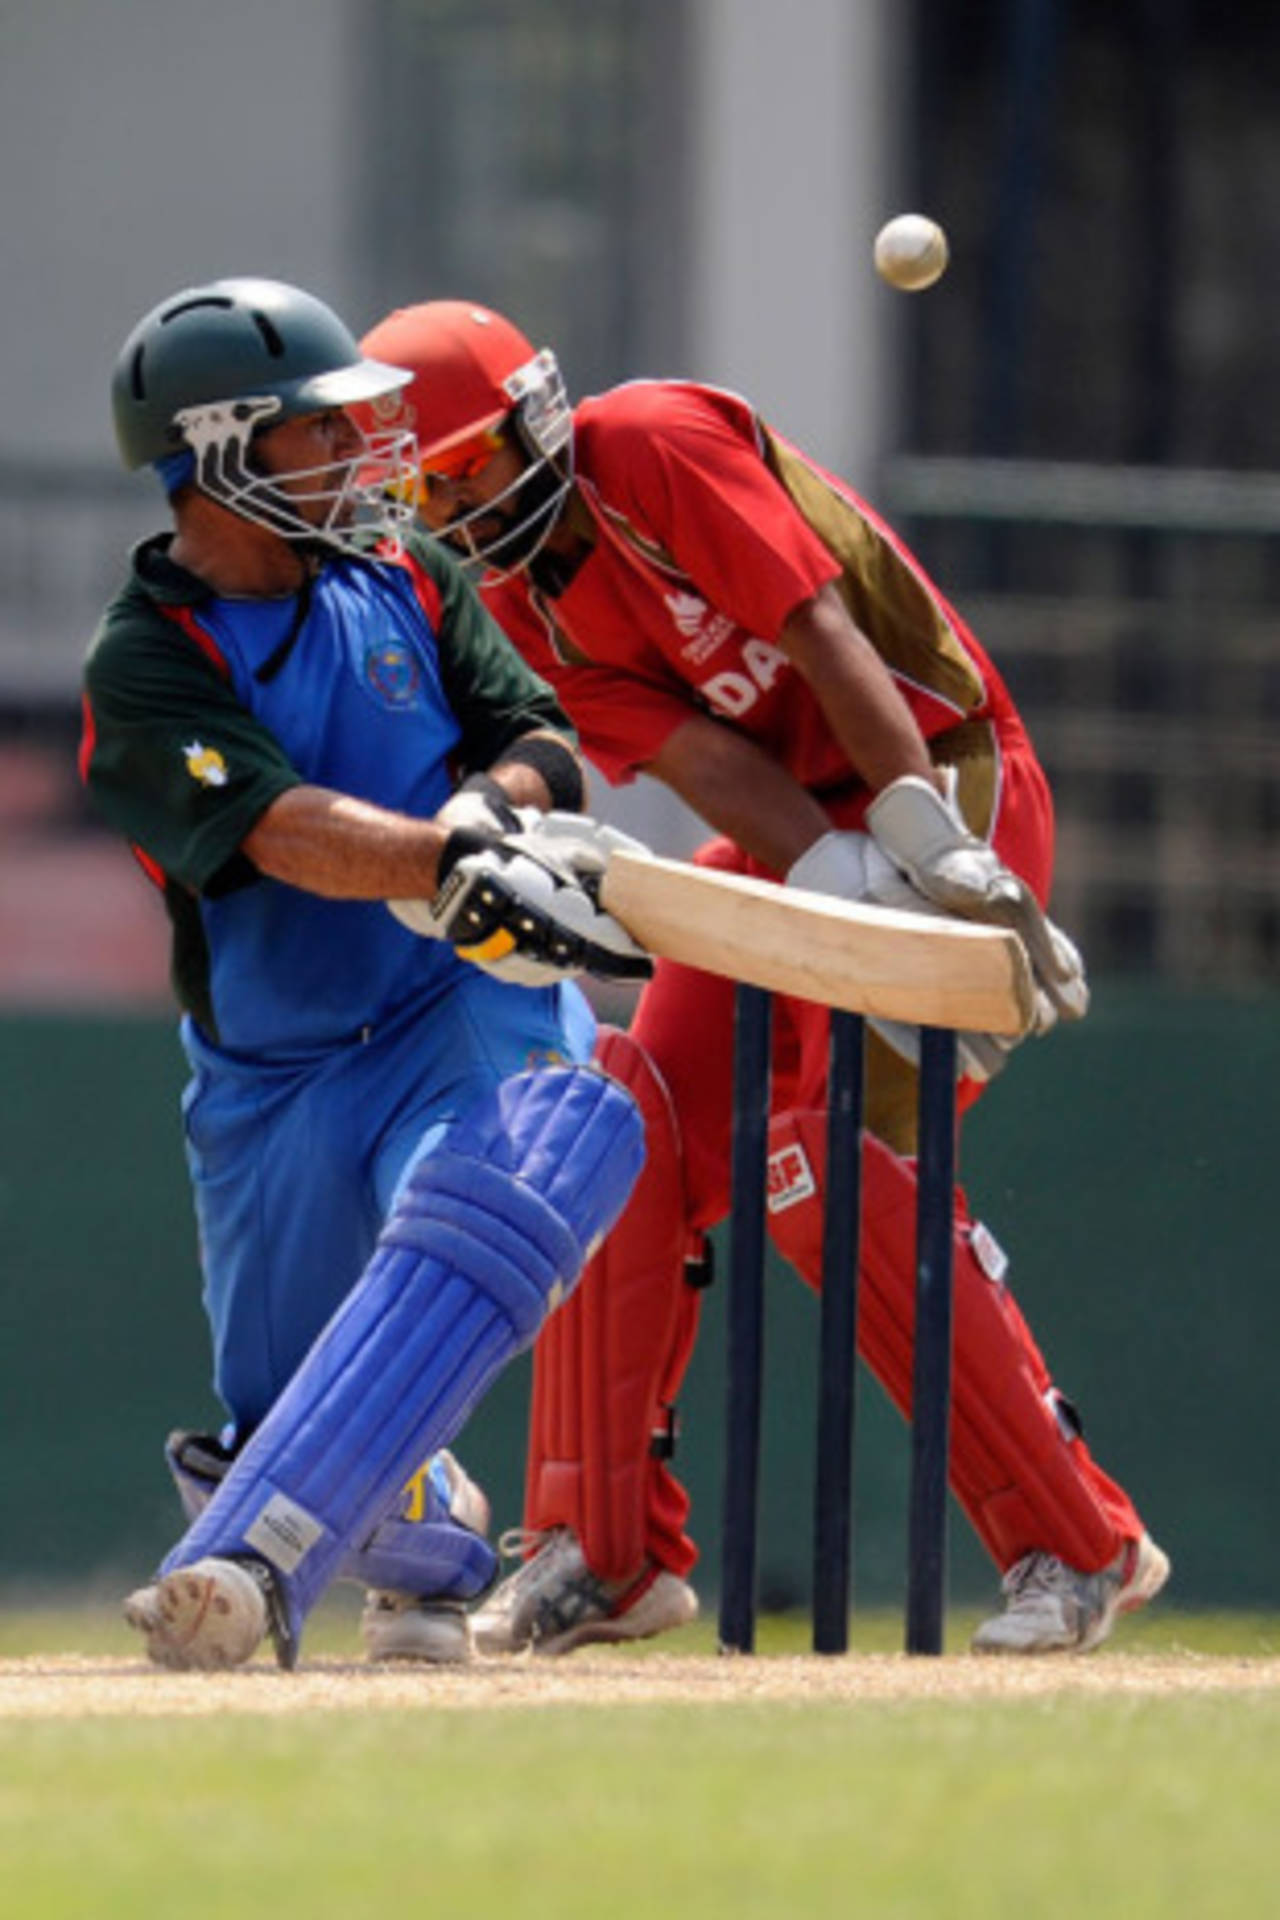 Karim Sadiq improvises during his innings, Afghanistan v Canada, Associate T20 Series, Colombo, February 4, 2010